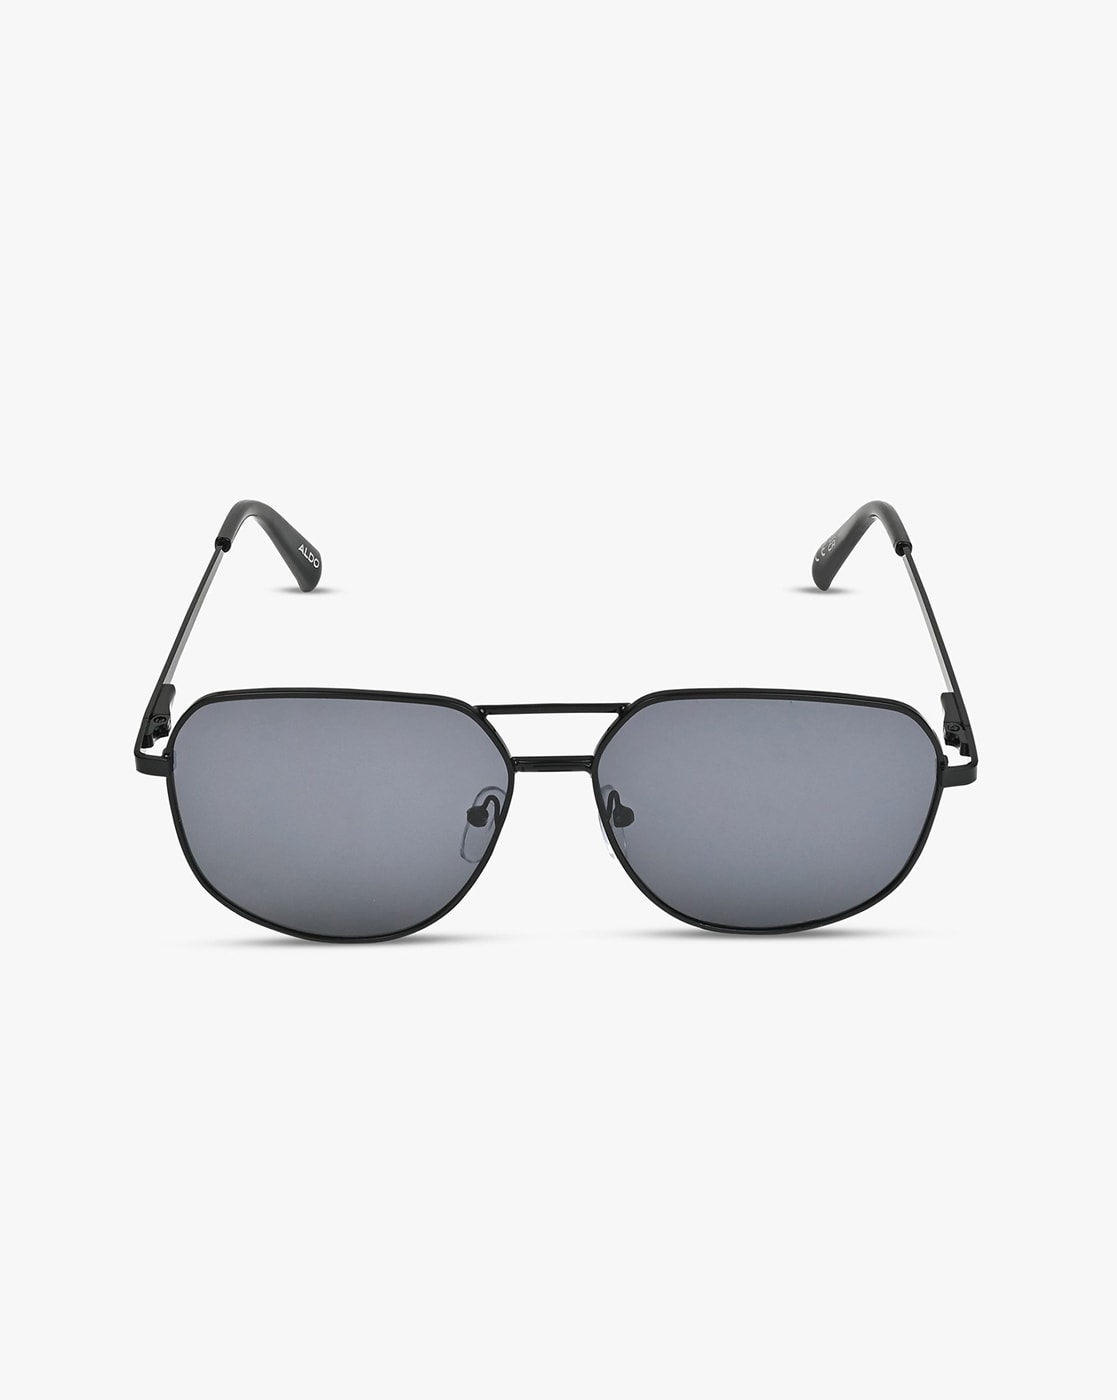 Buy Sunglasses Online | Accessories | Men | Aldo KSA